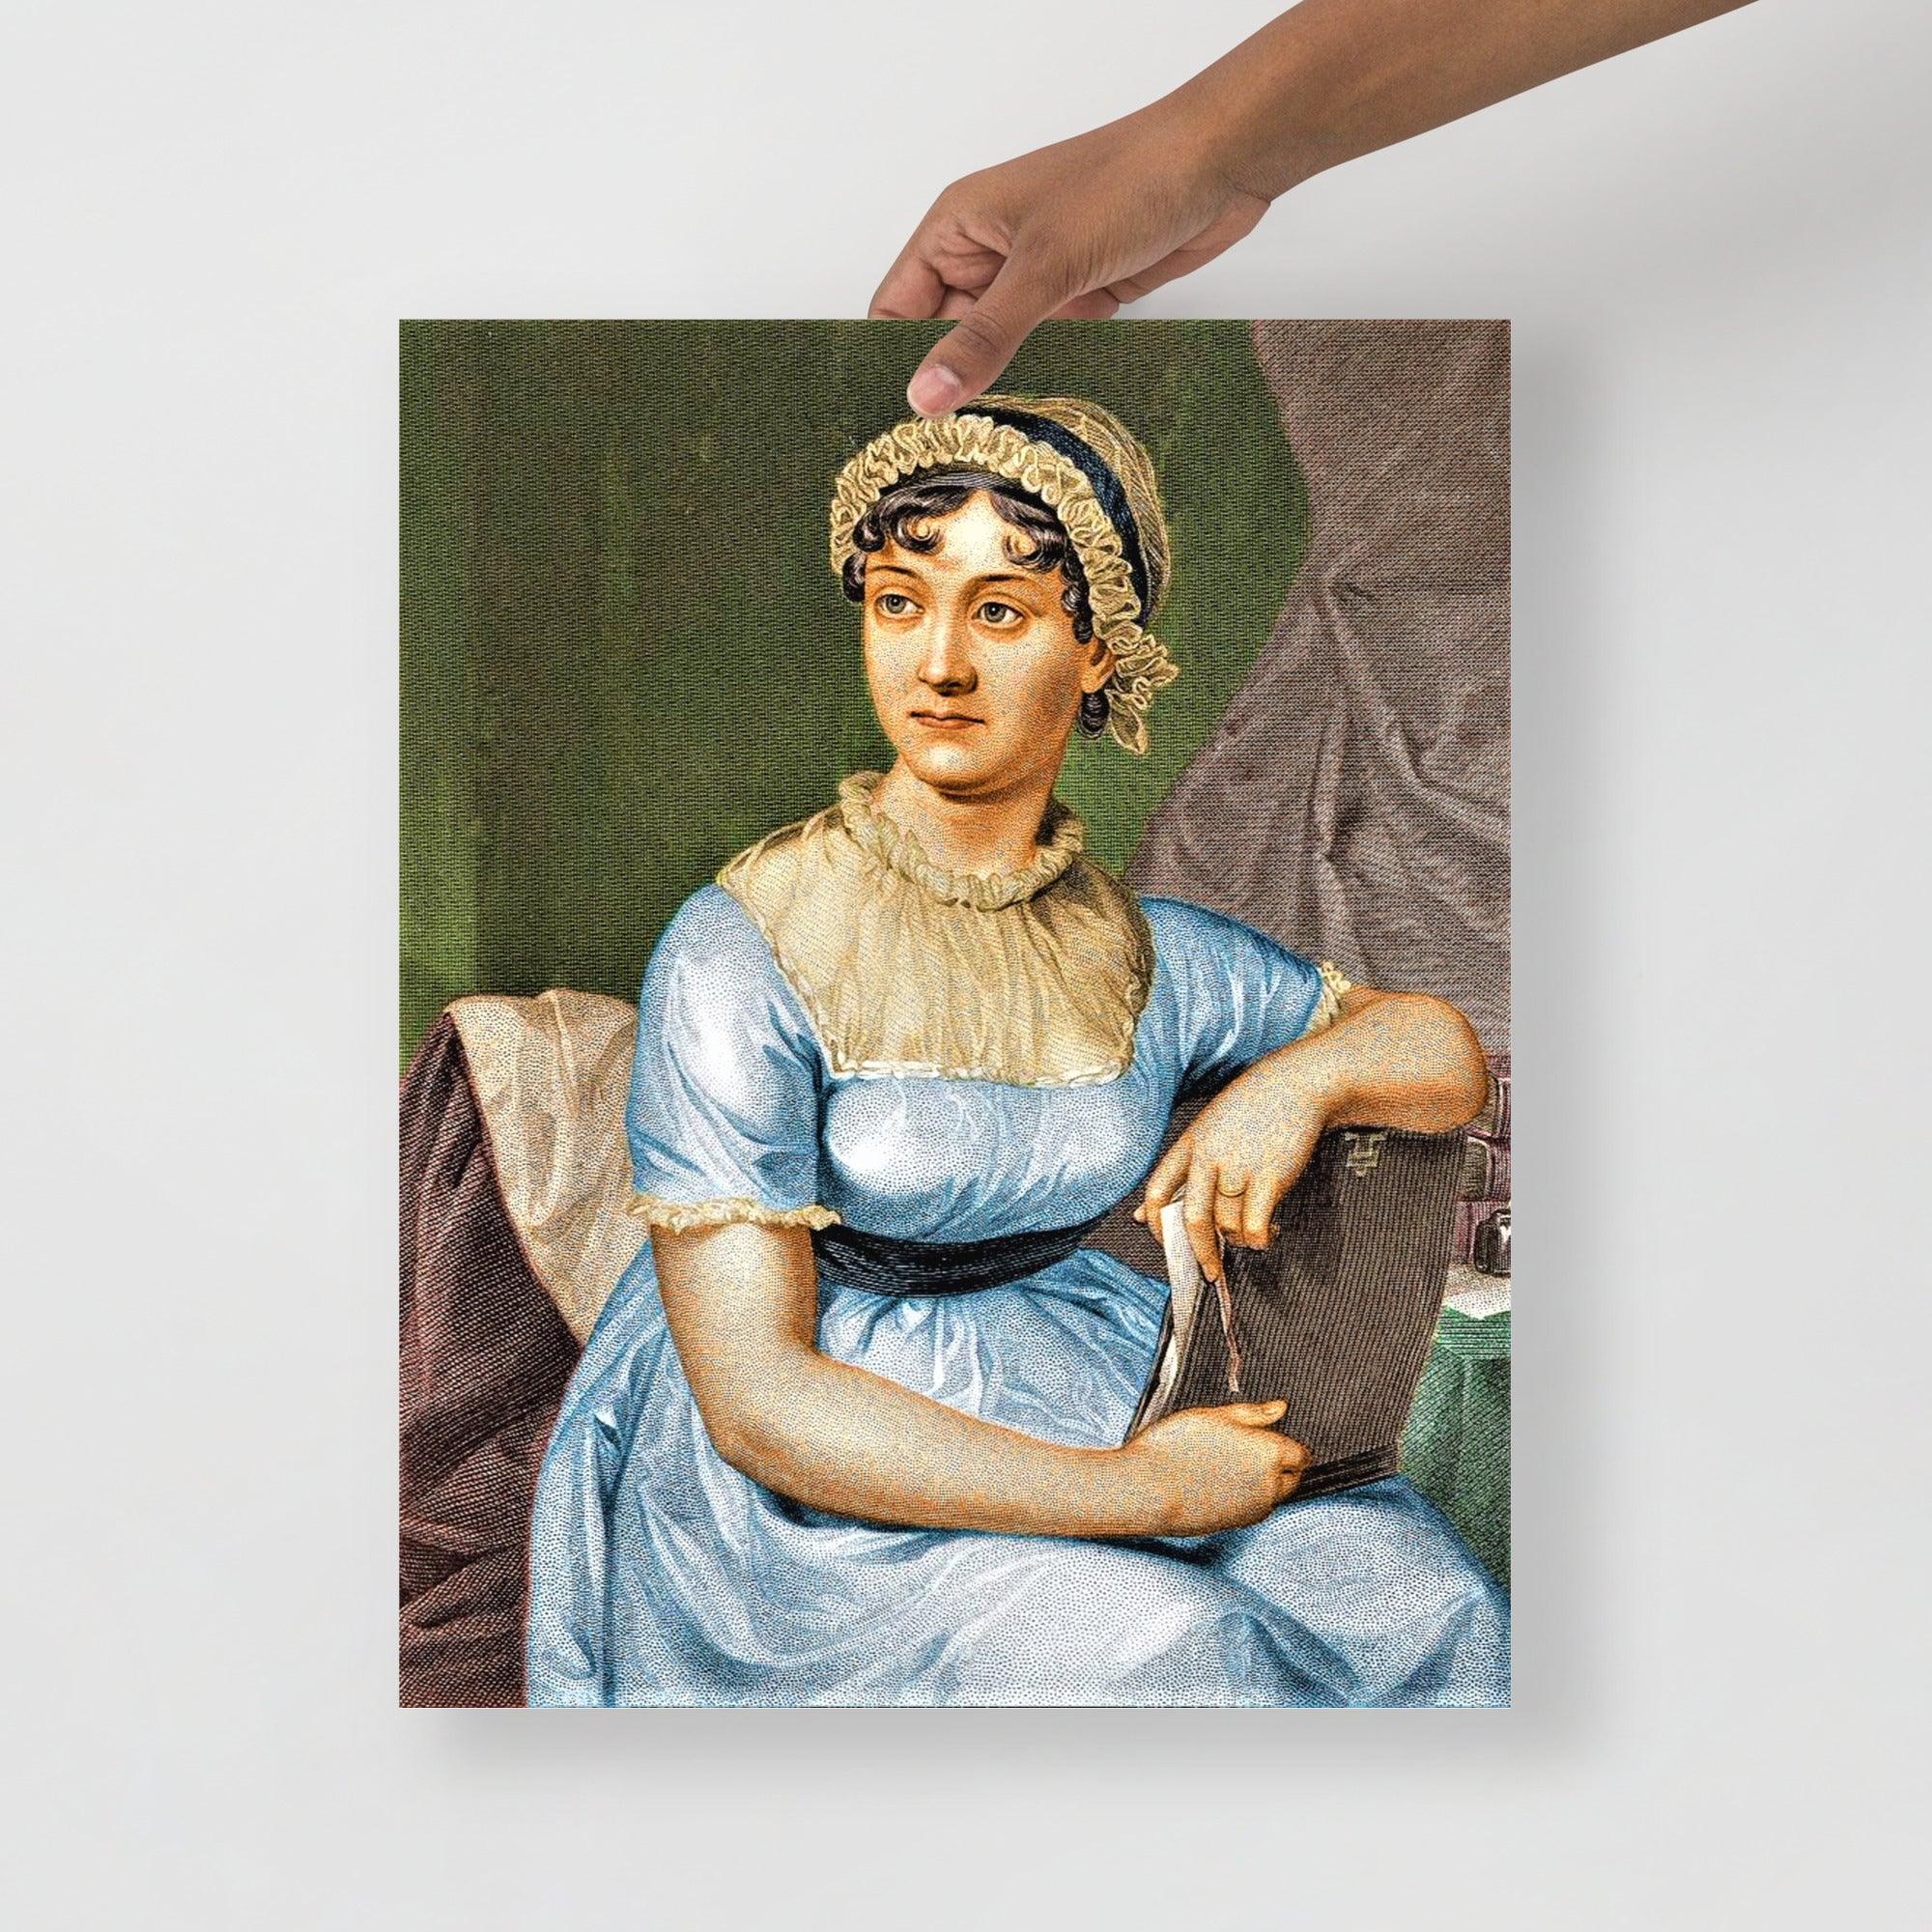 A Jane Austen poster on a plain backdrop in size 16x20”.